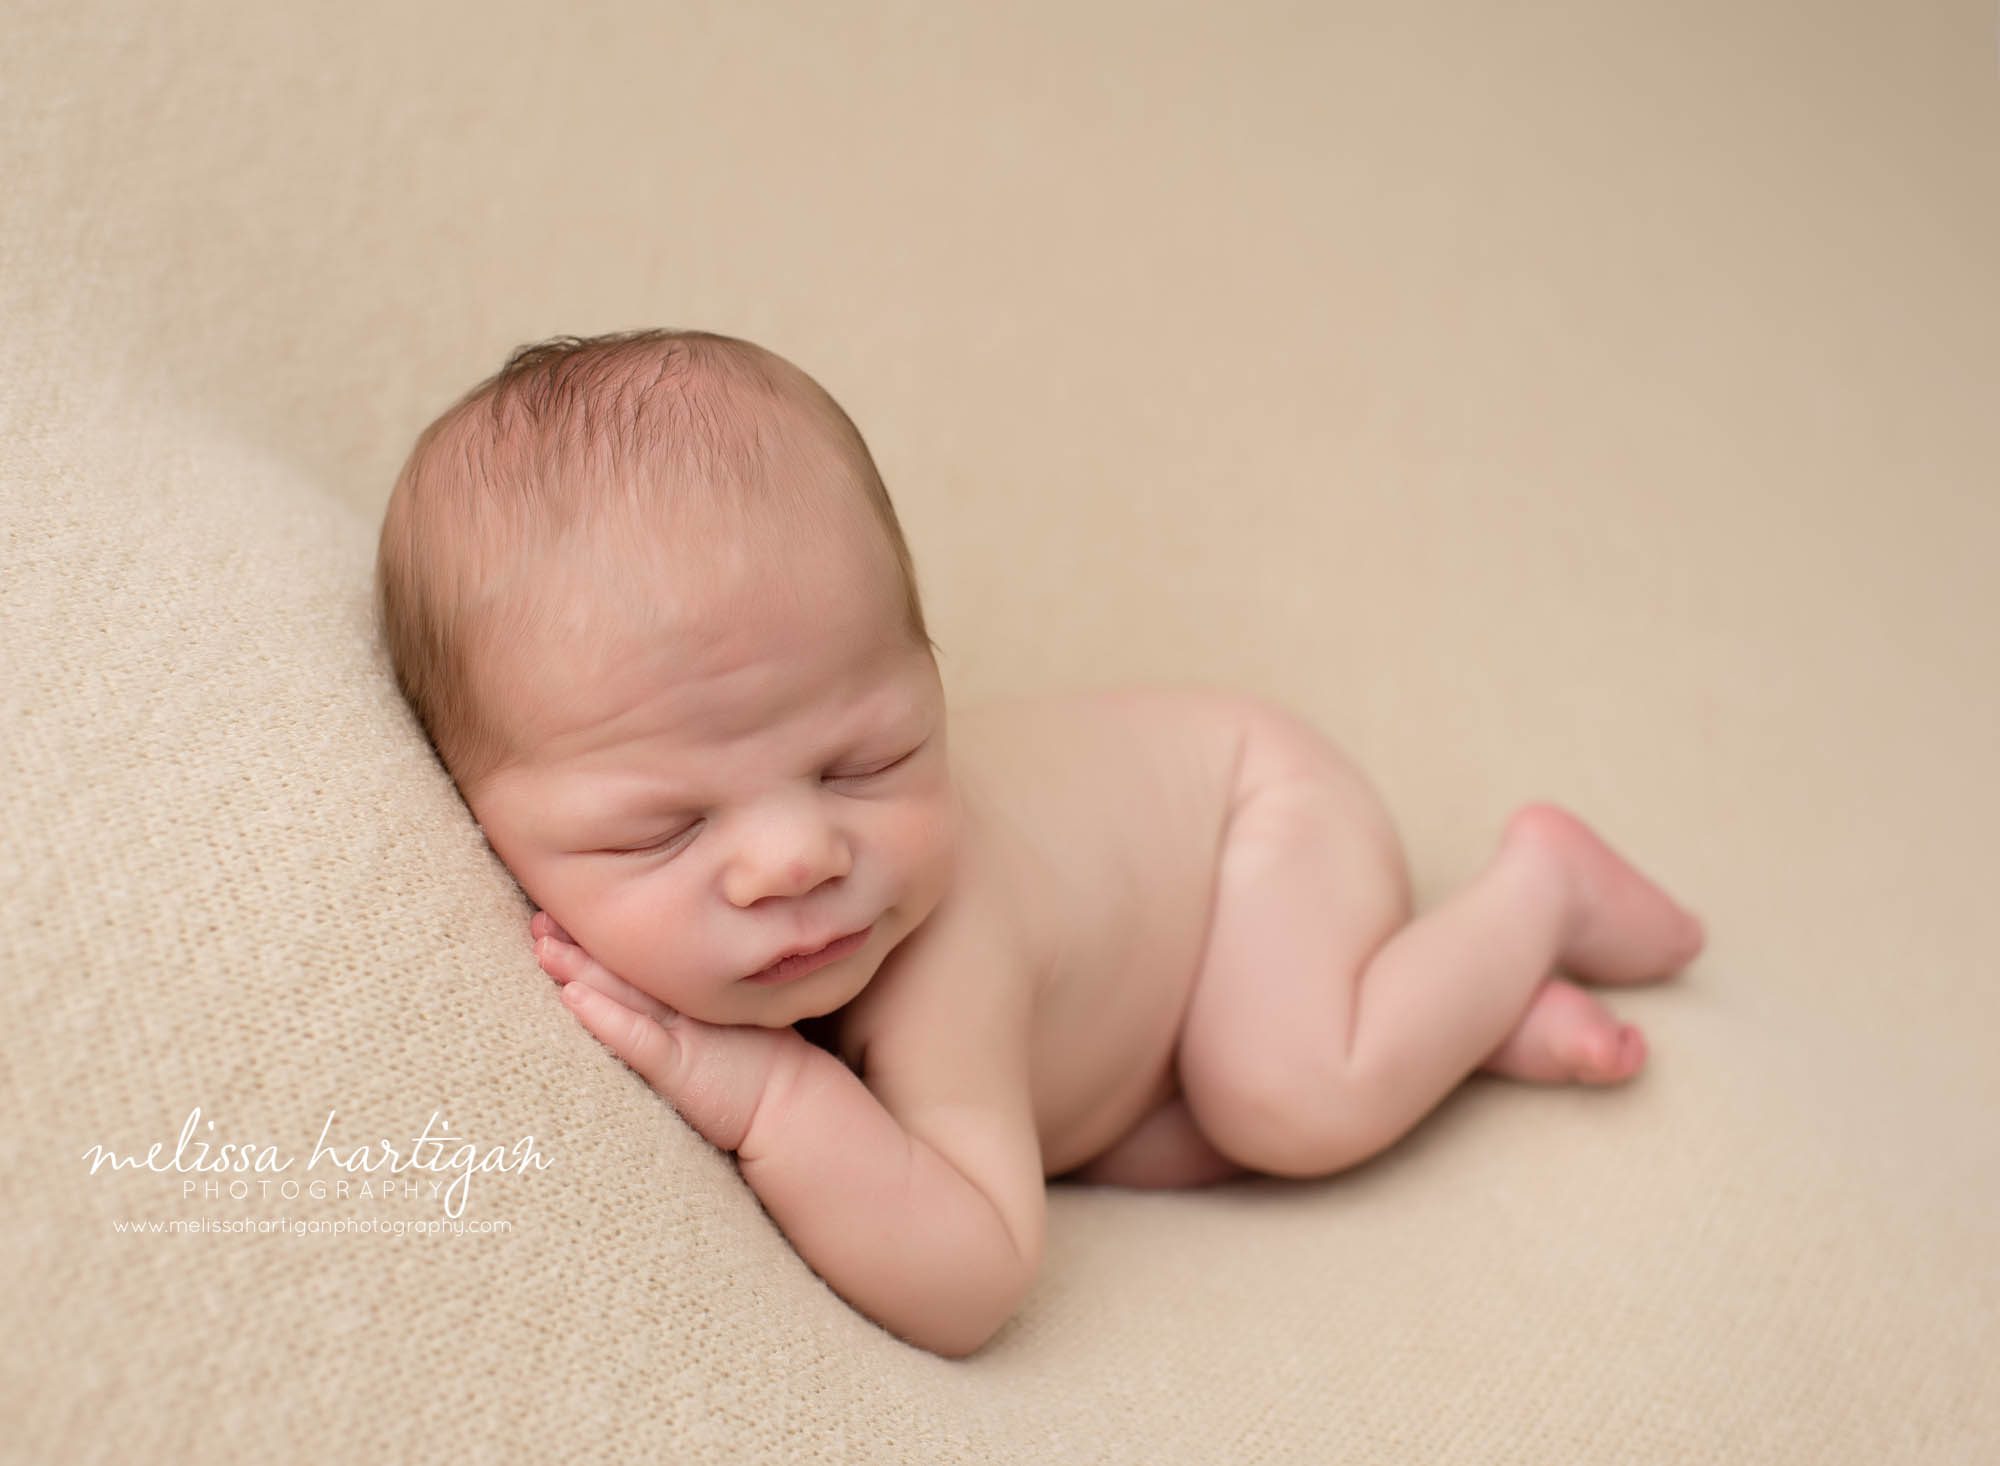 newborn baby boy sleeping on side on neutral colored backdropo newborn photography